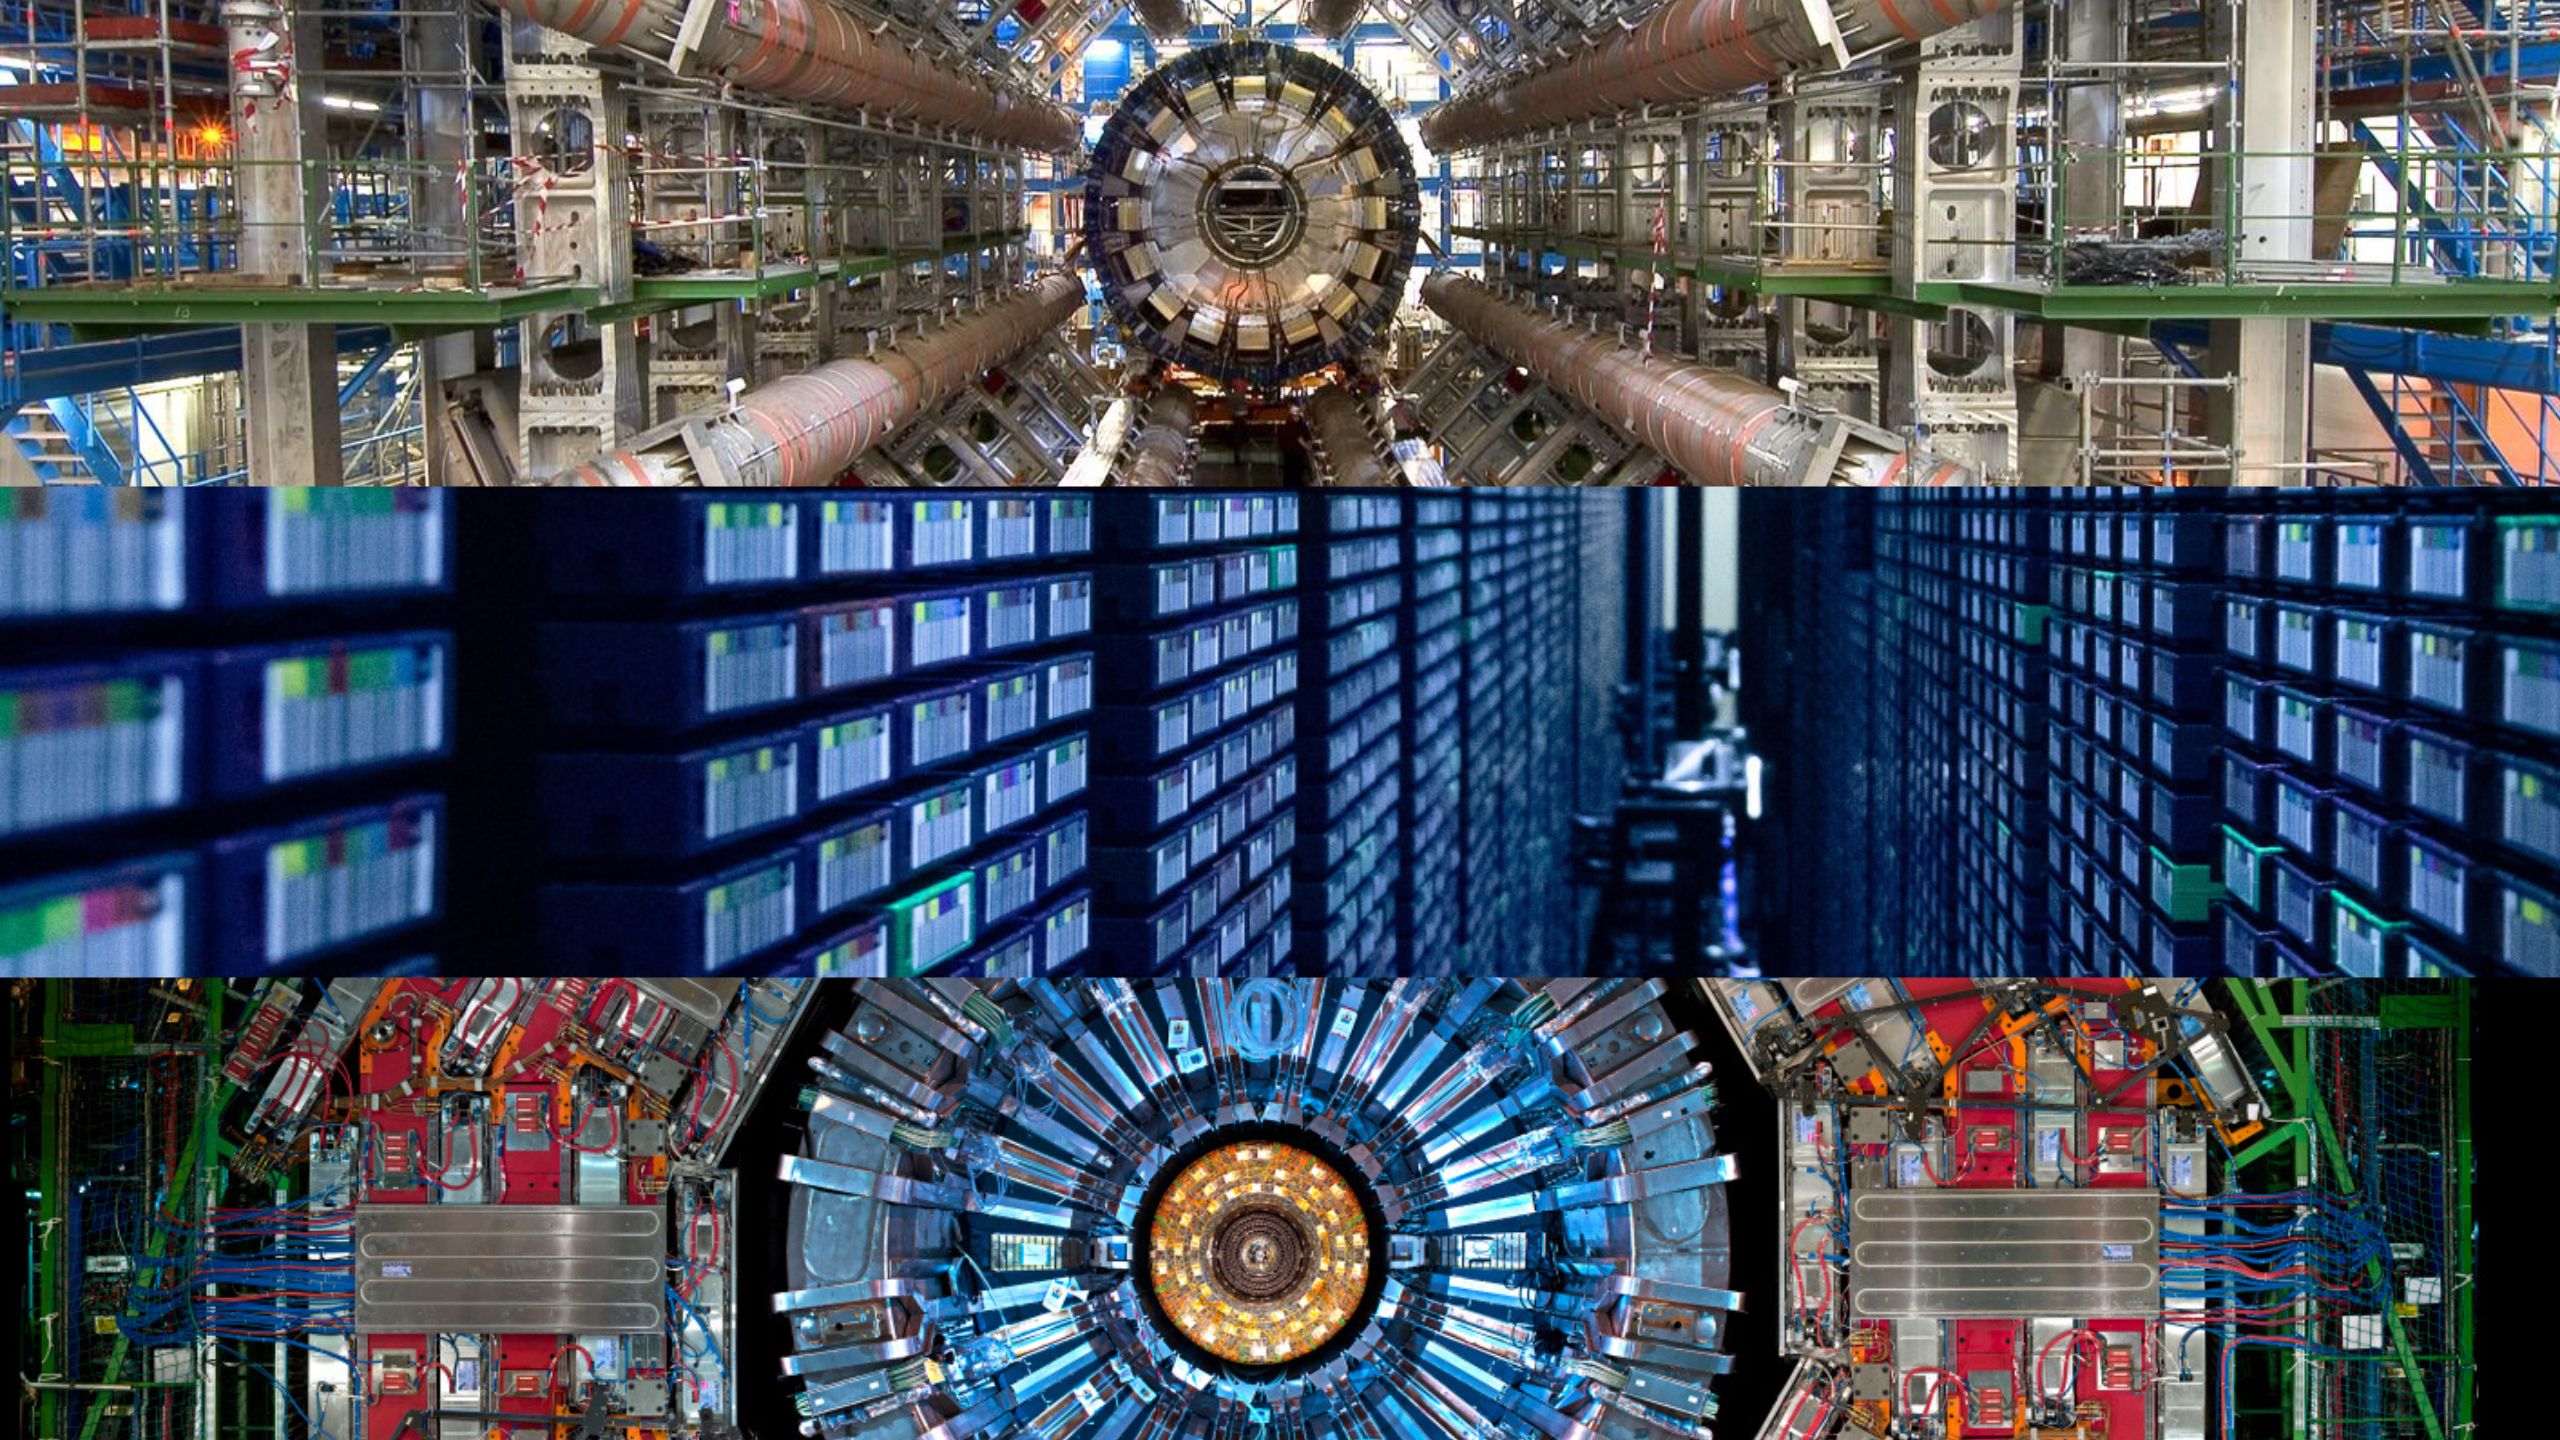 The Next Generation Triggers for CERN detectors